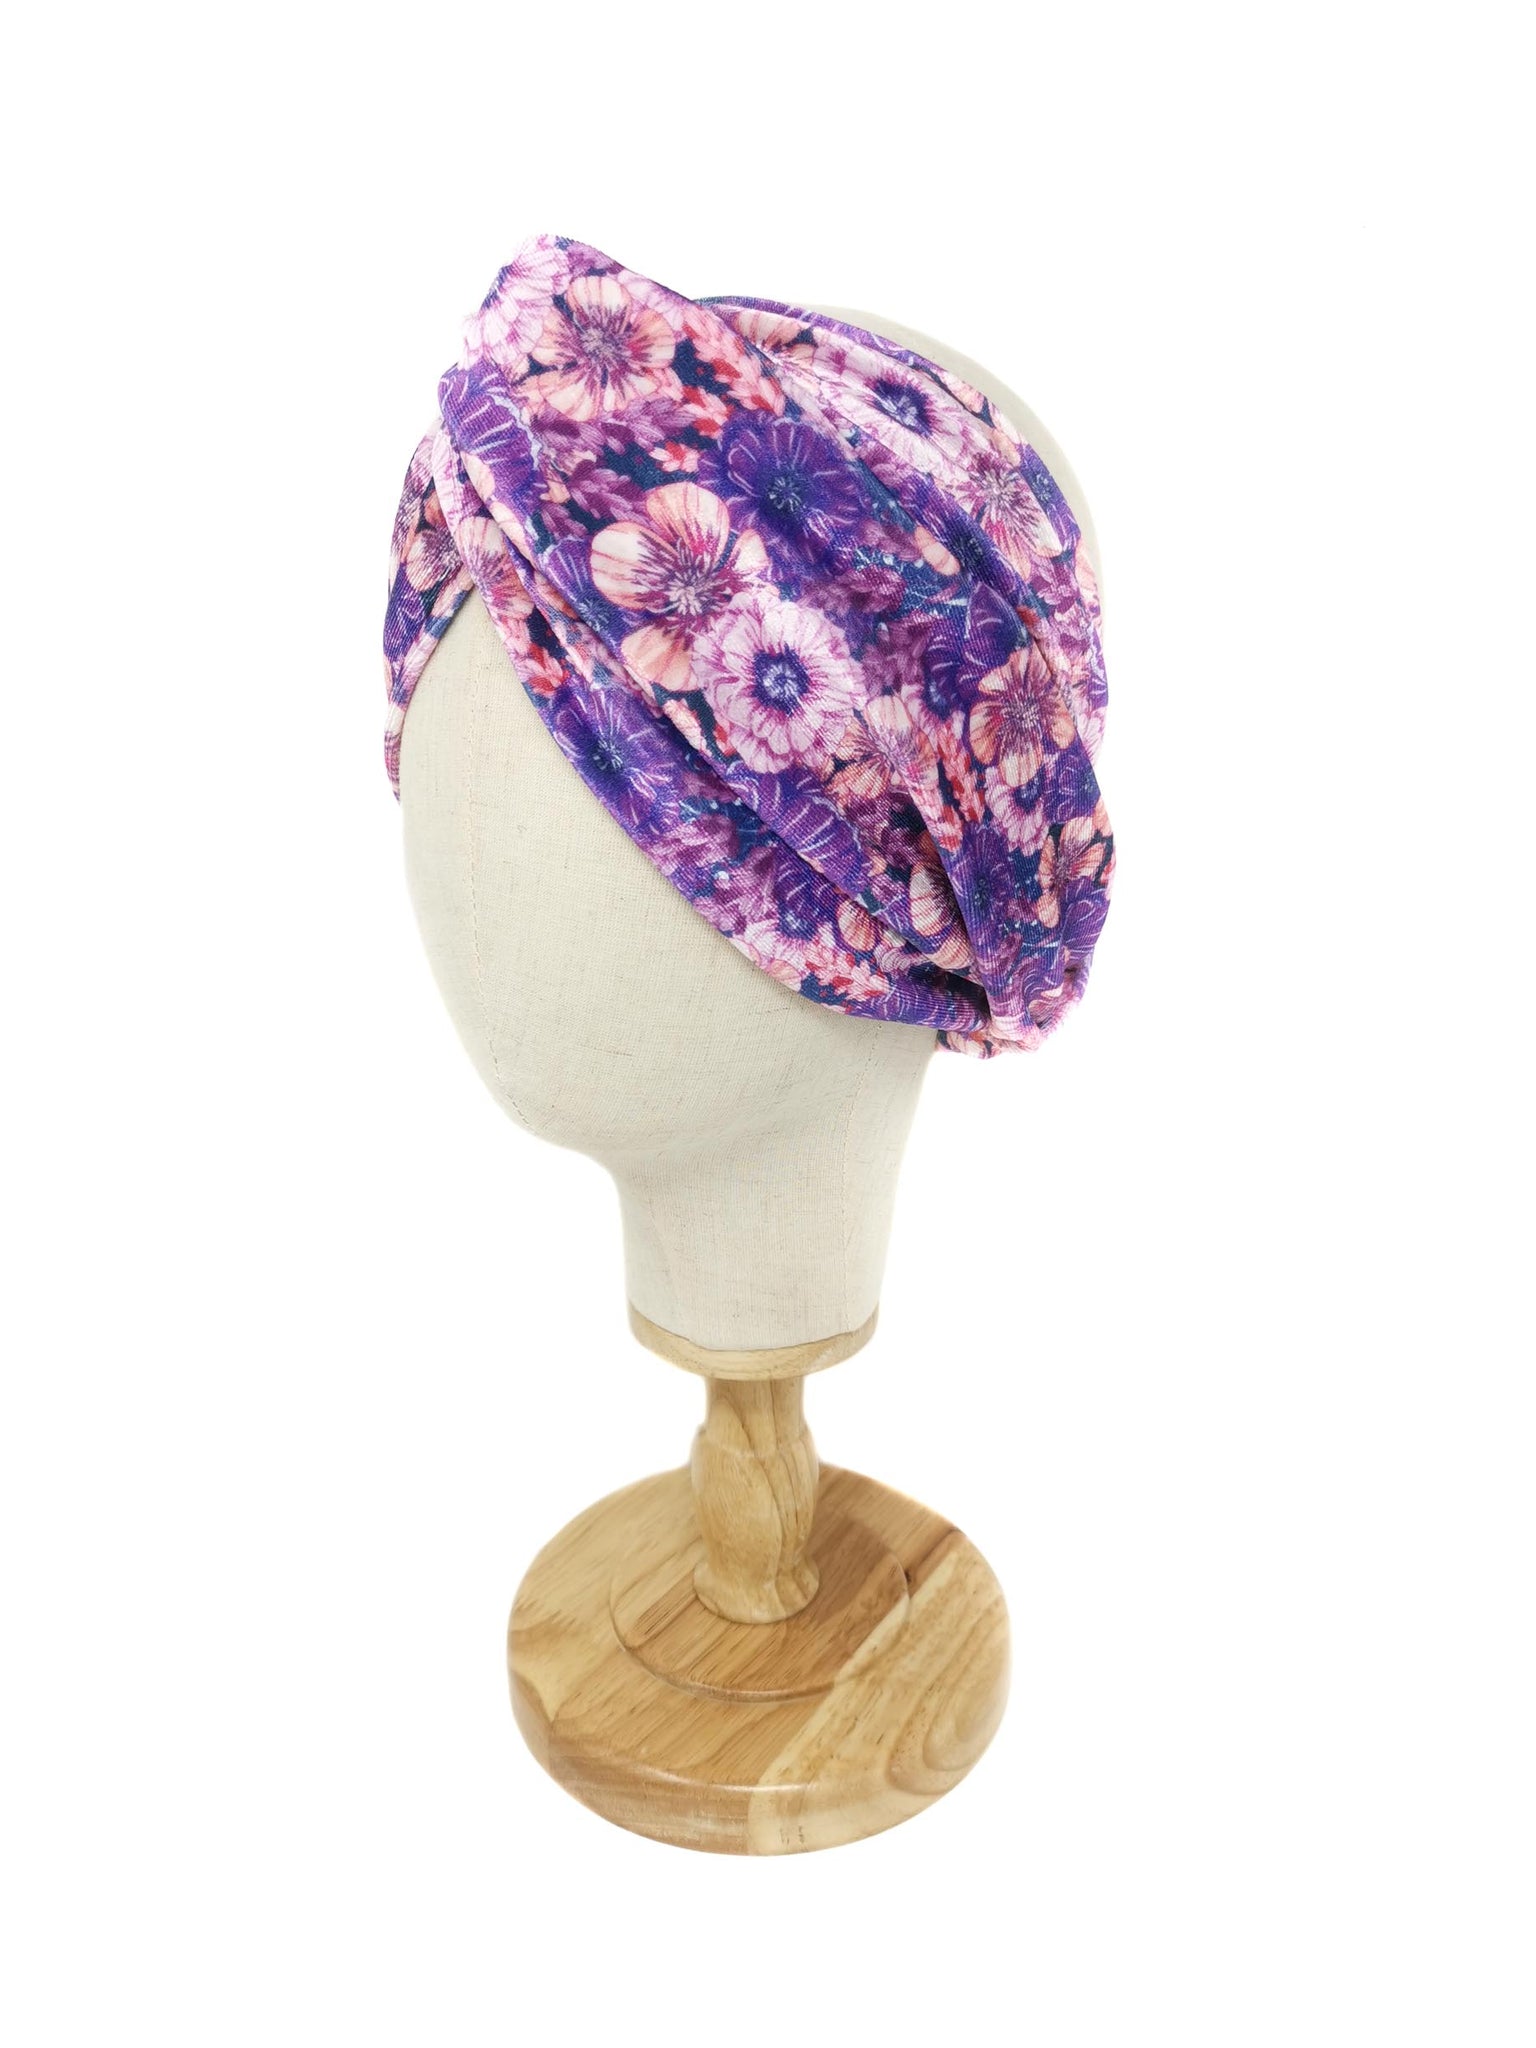 Purple and pink flower patterned velvet headband